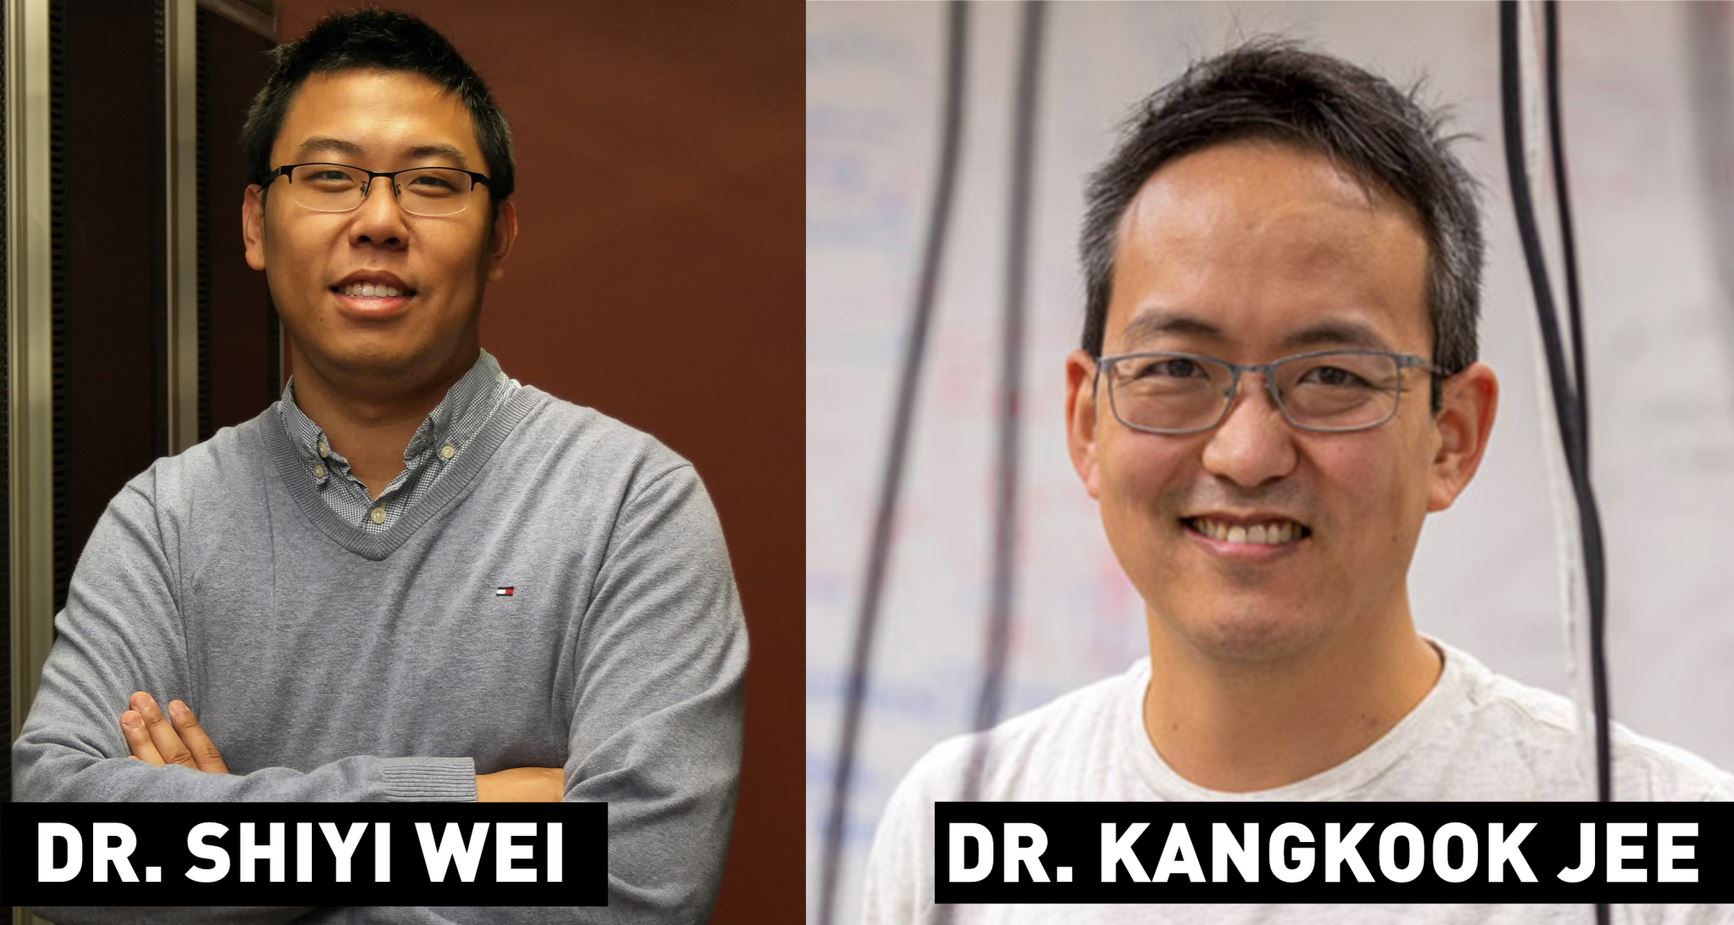 Dr. Shiyi Wei and Dr. Kangkook Jee